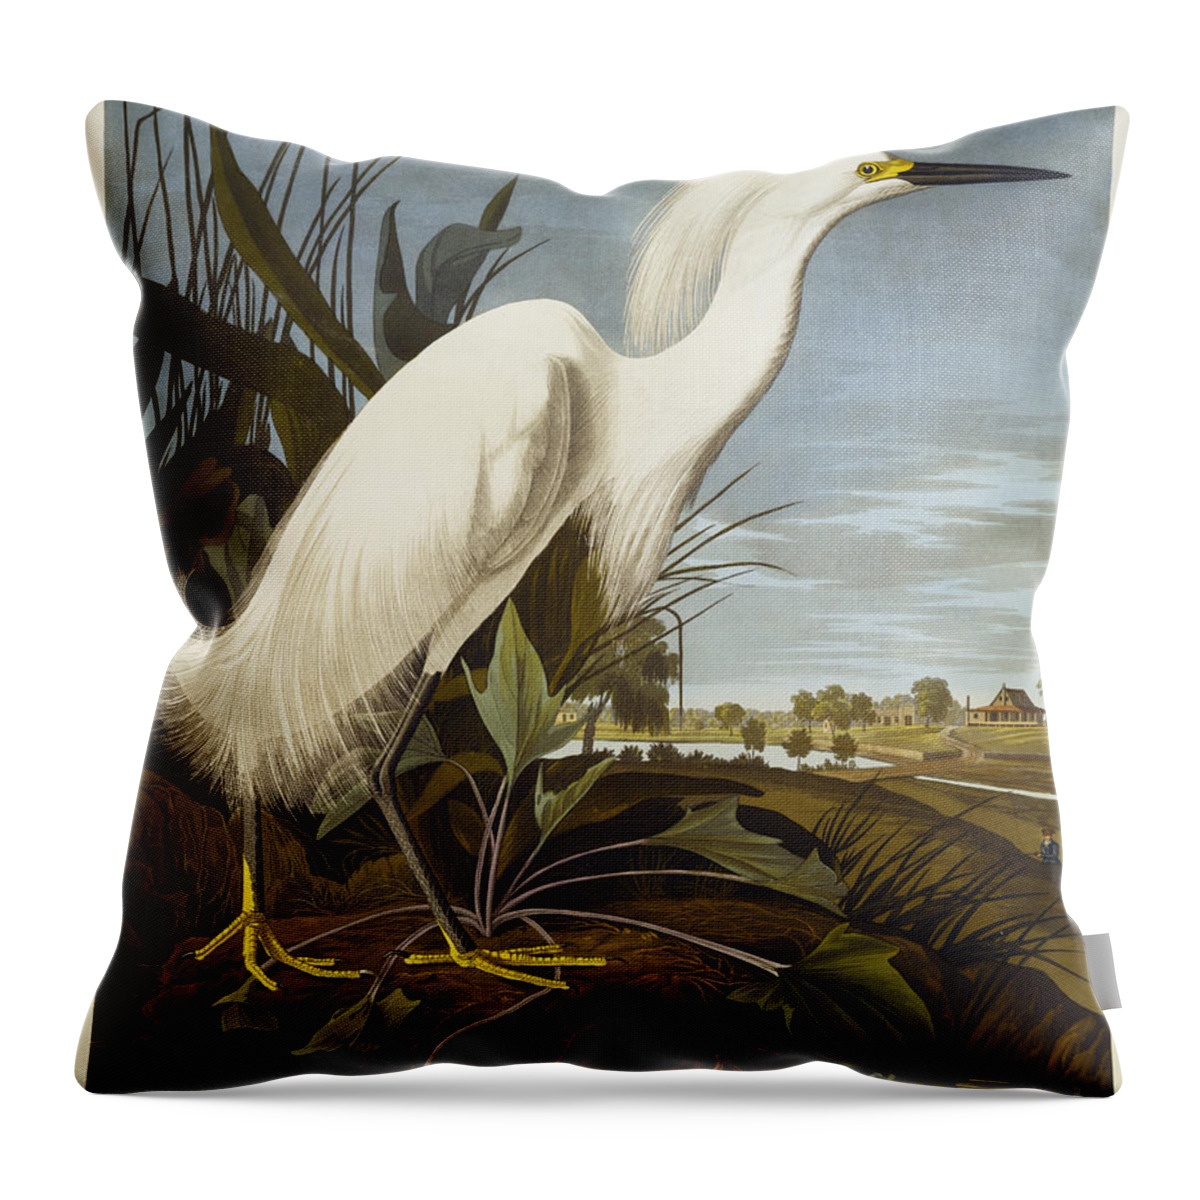 Snowy Heron Or White Egret Throw Pillow featuring the drawing Snowy Heron by John James Audubon